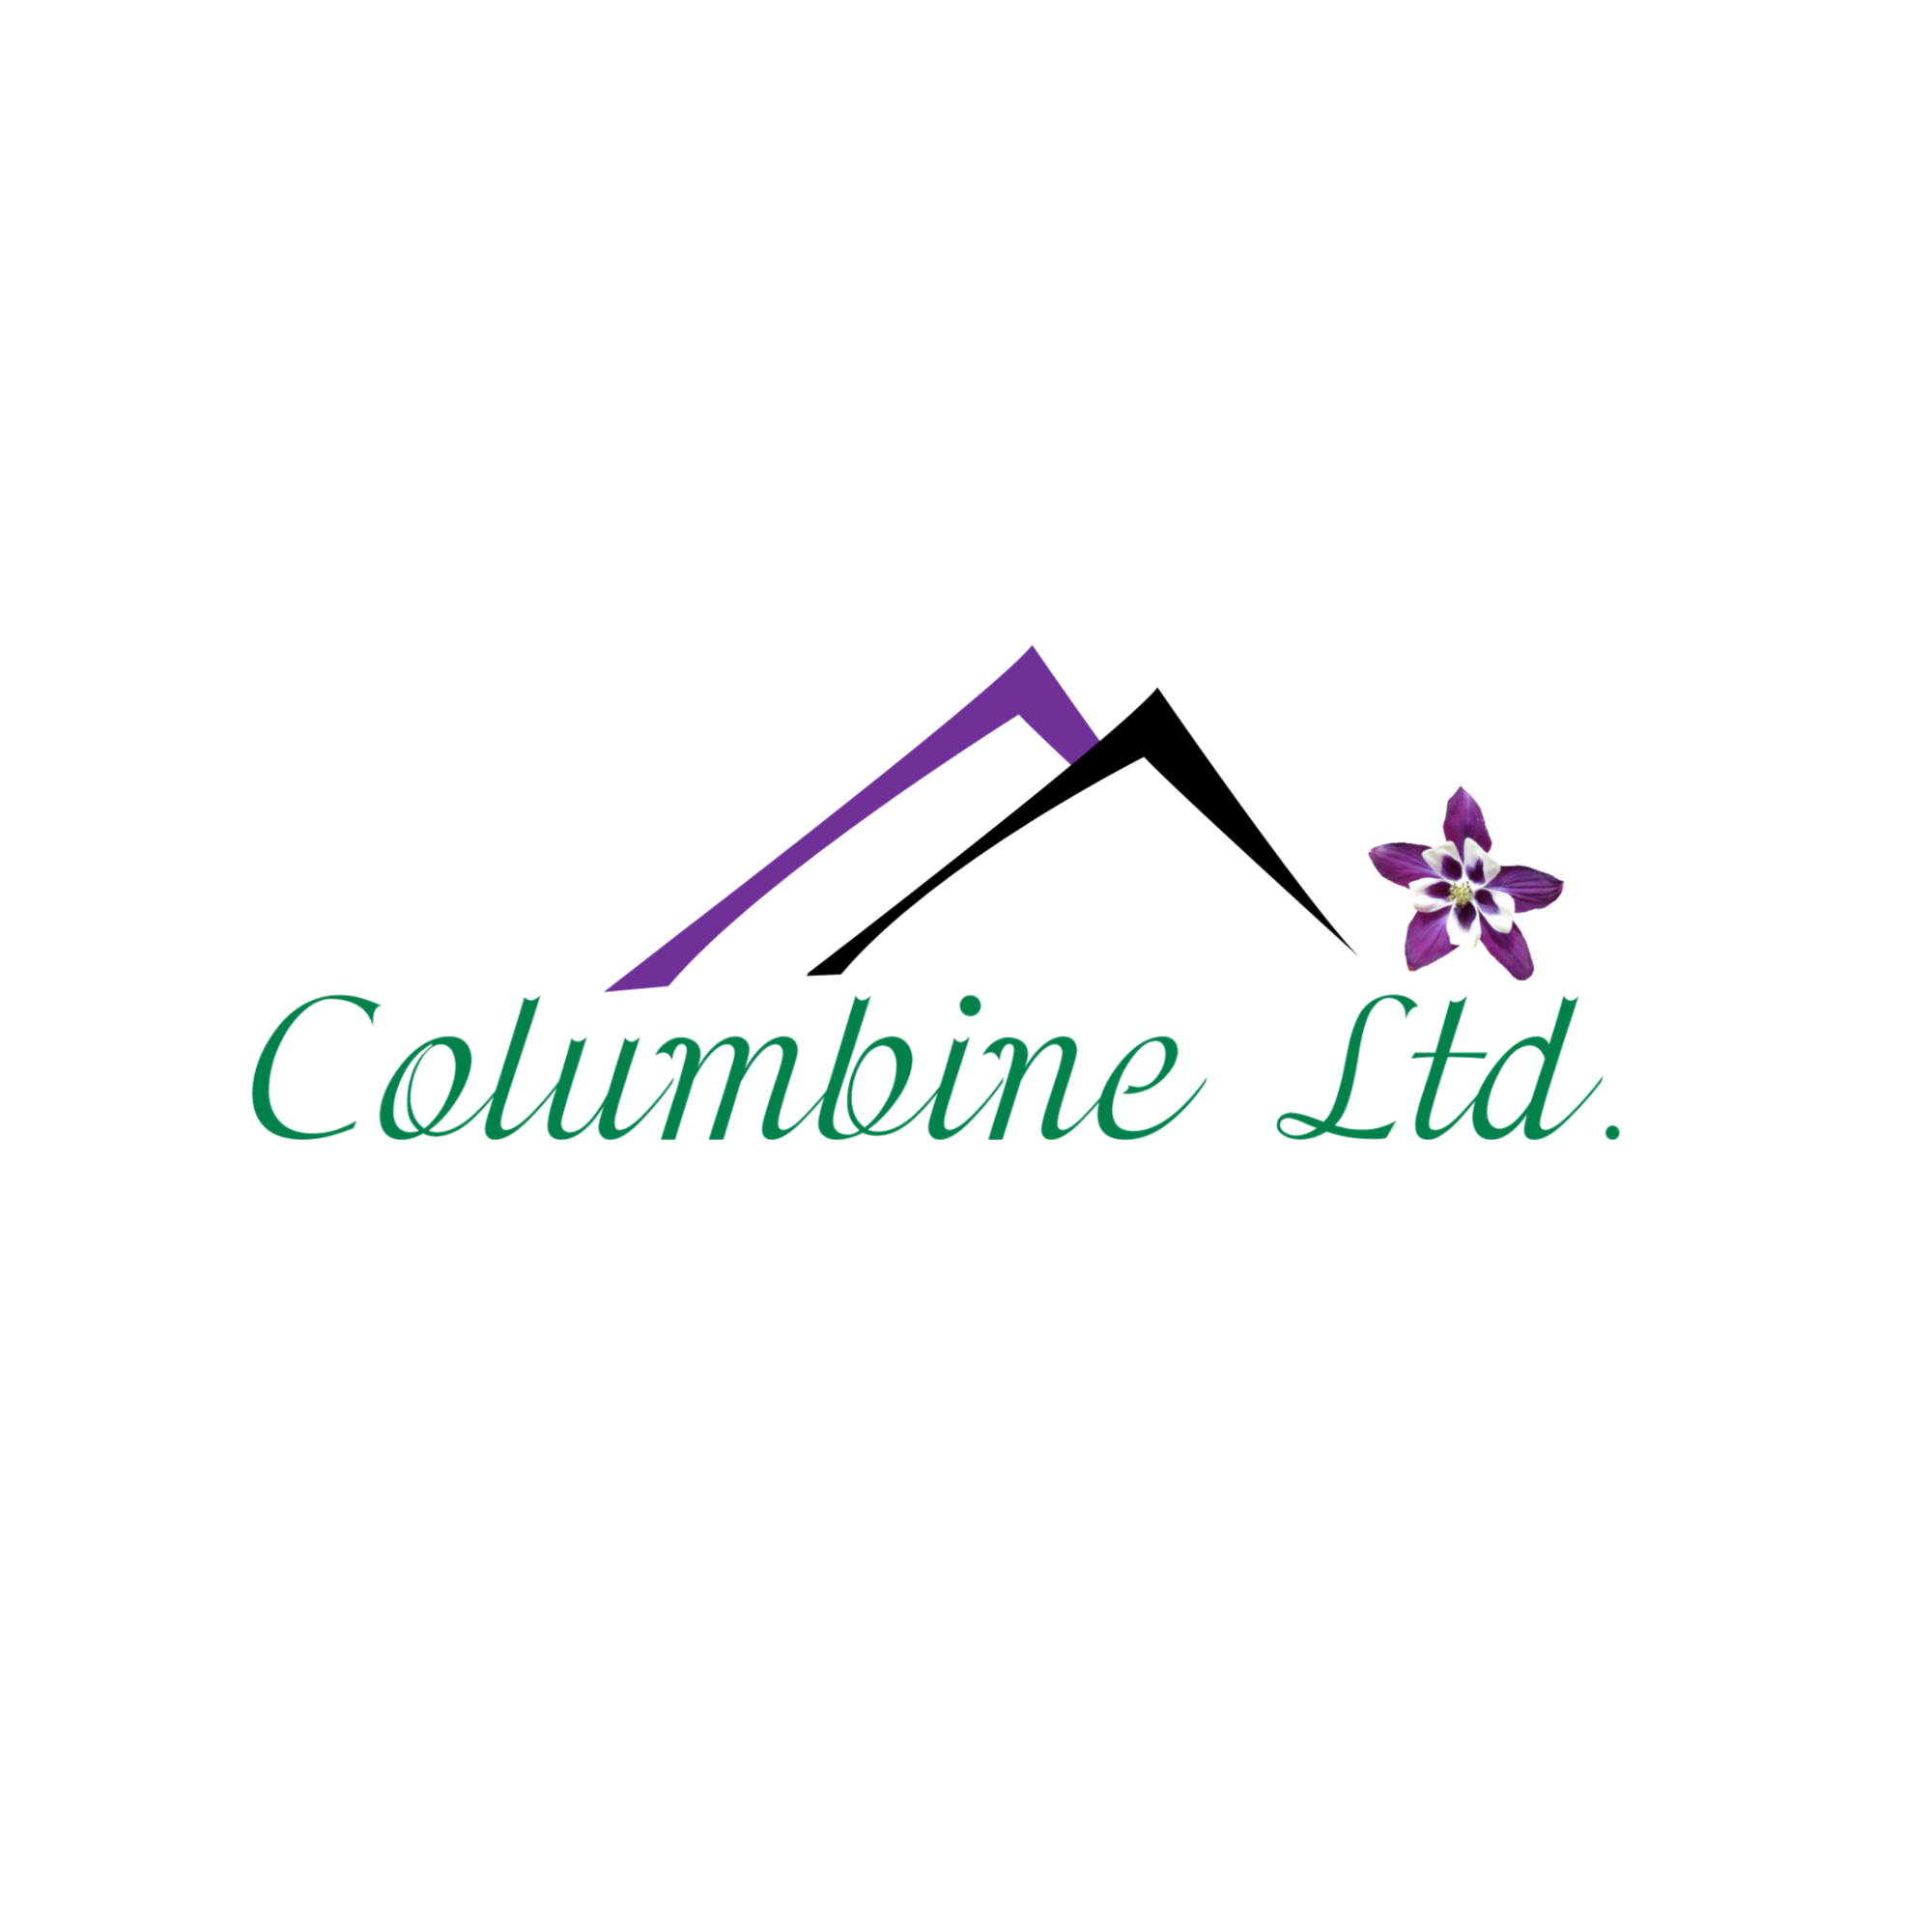 Columbine Ltd Insurance